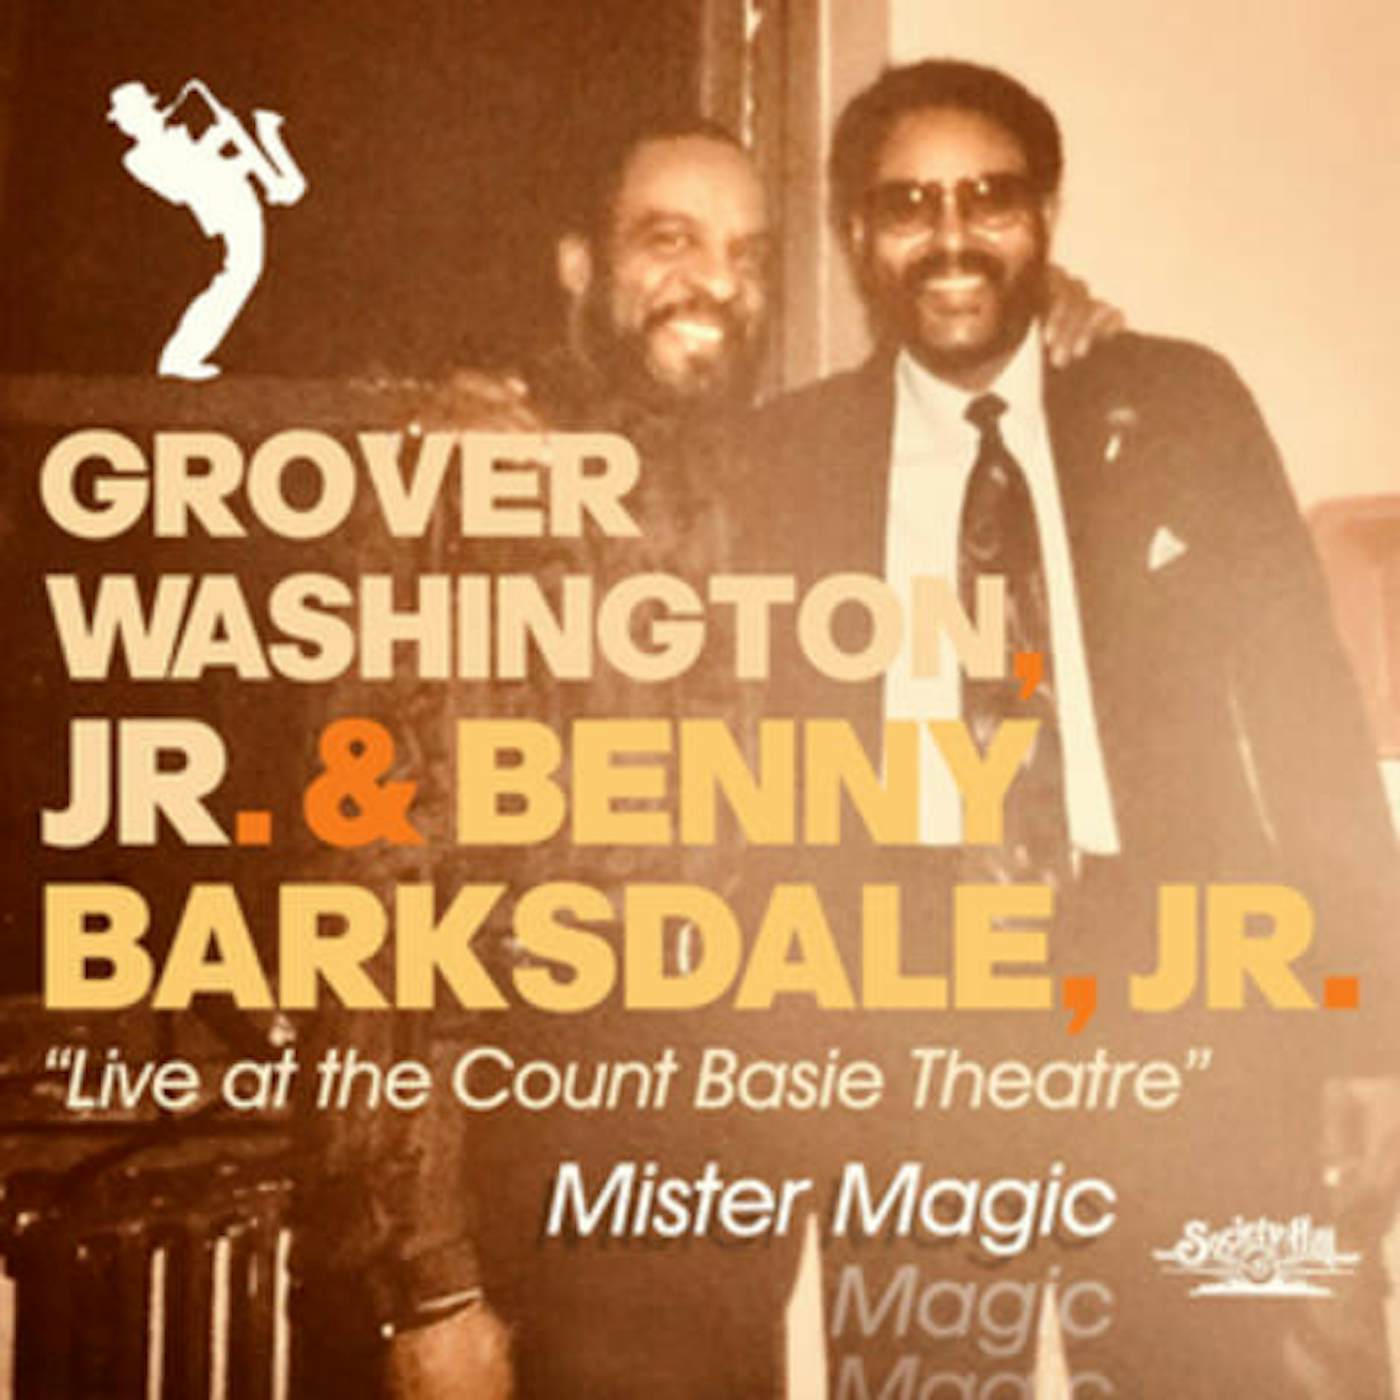 GROVER WASHINGTON JR. / BENNY BARKSDALE JR. MISTER MAGIC - LIVE AT THE COUNT BASIE THEATRE CD